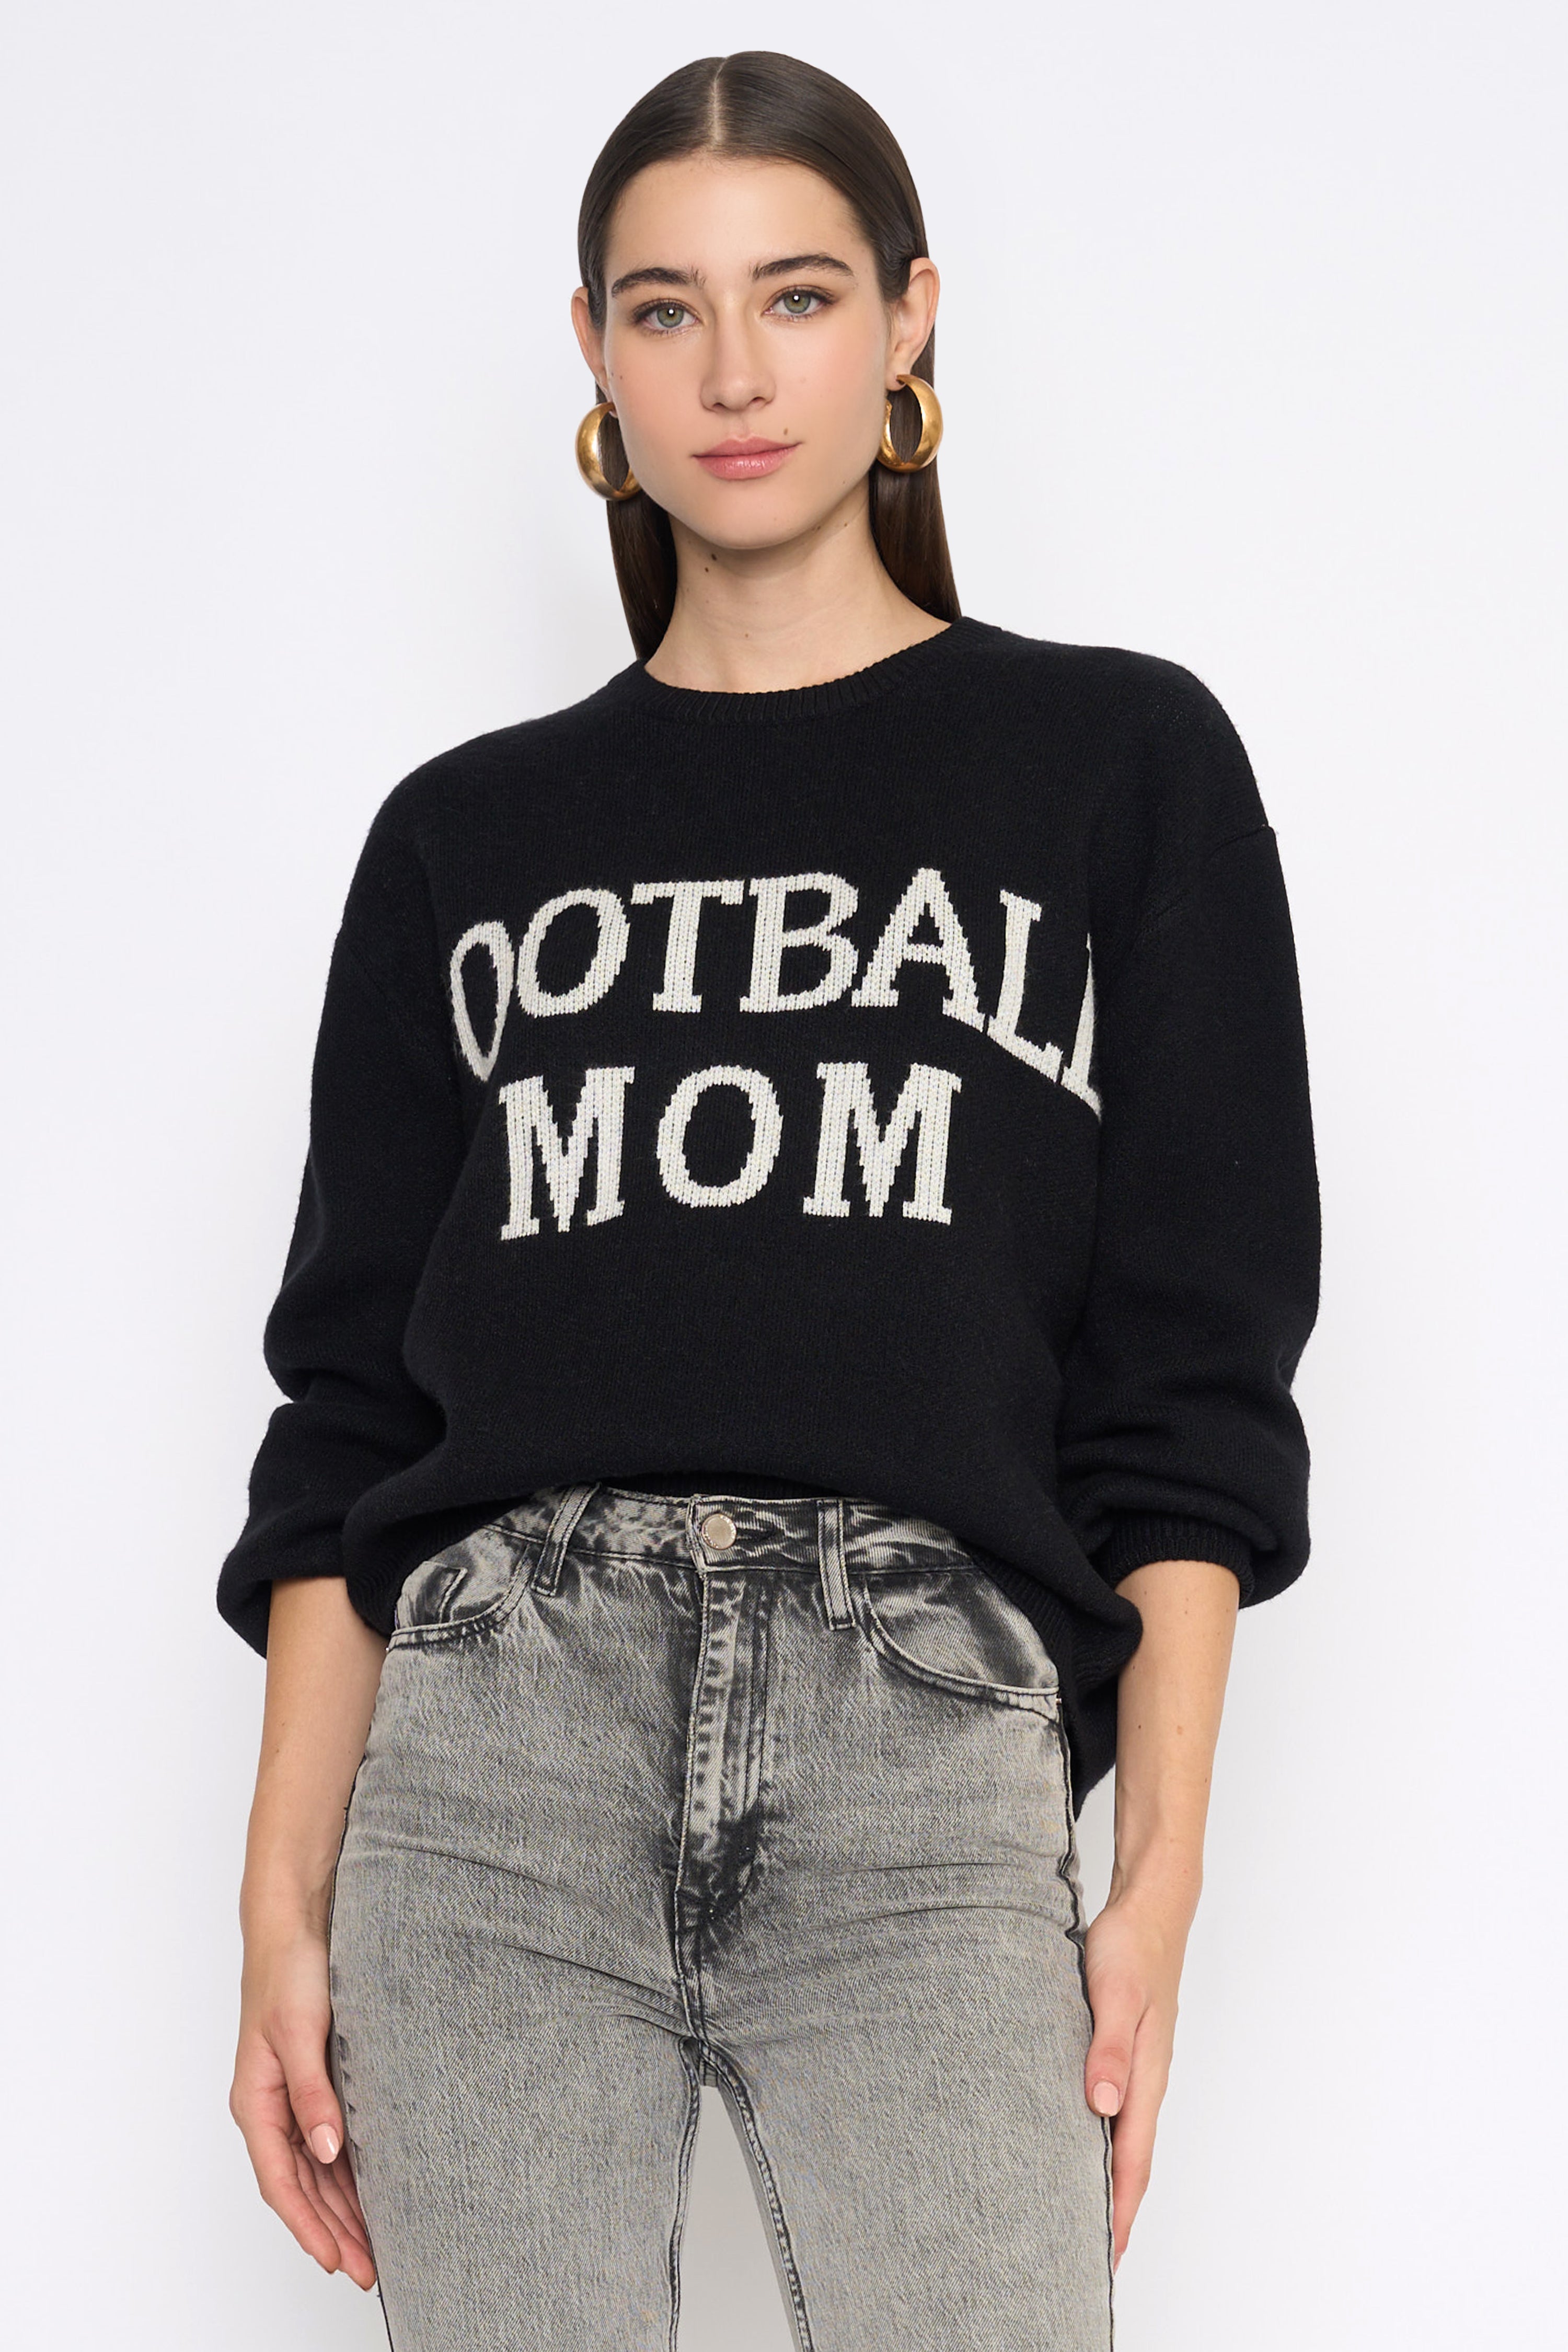 Football Mom Sweater